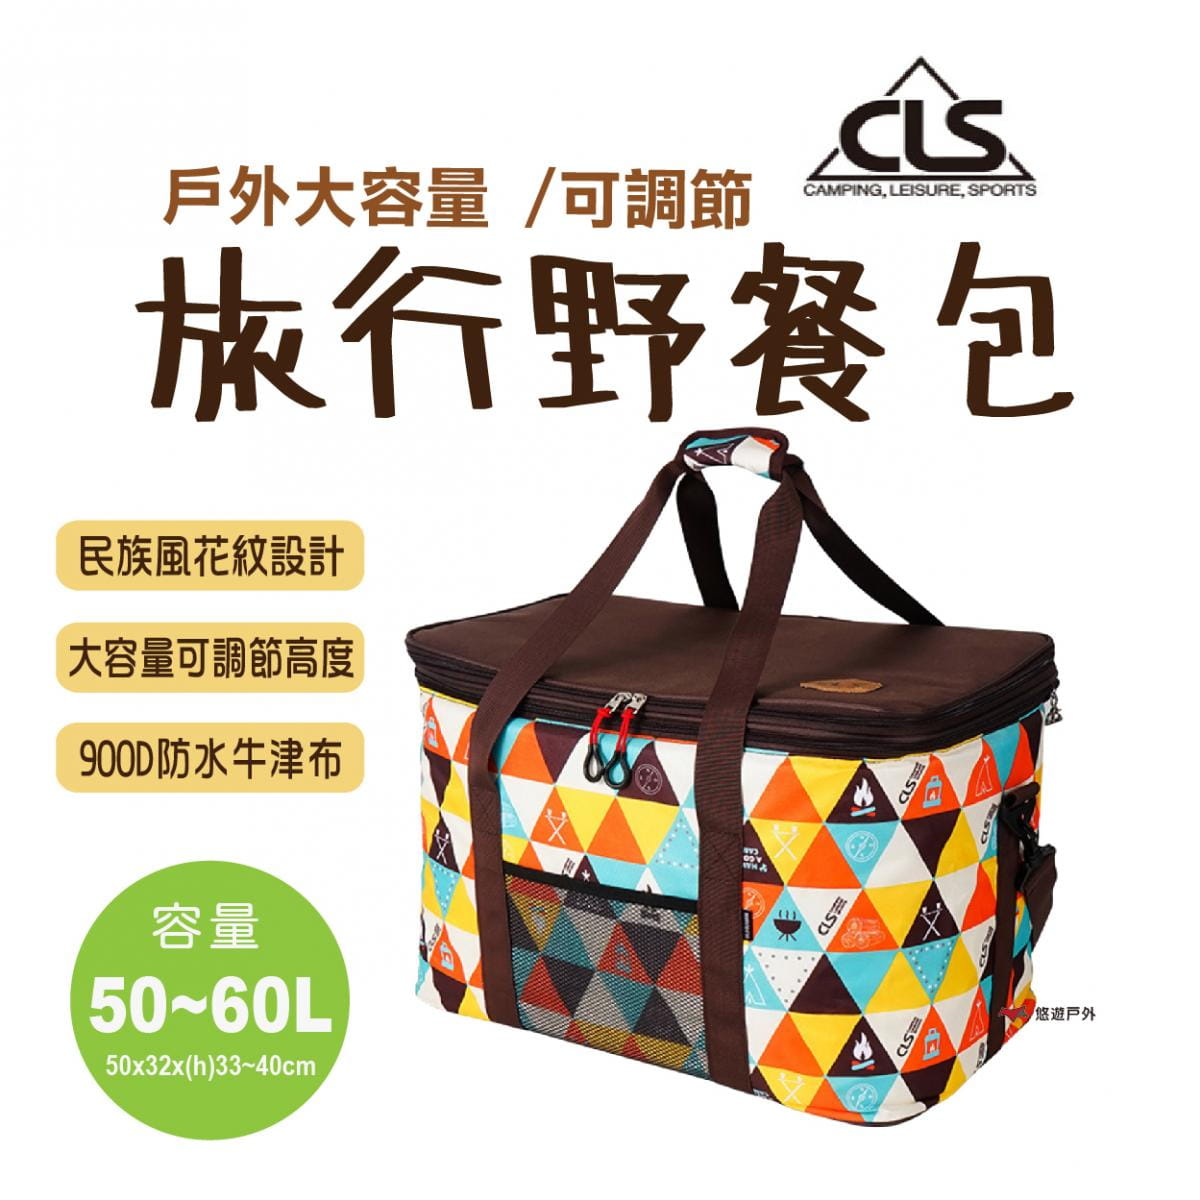 【CLS】韓國 旅行野餐包 50L大容量 野營包 可調節高度 收納包 露營手提包 自駕旅行 野餐包 0